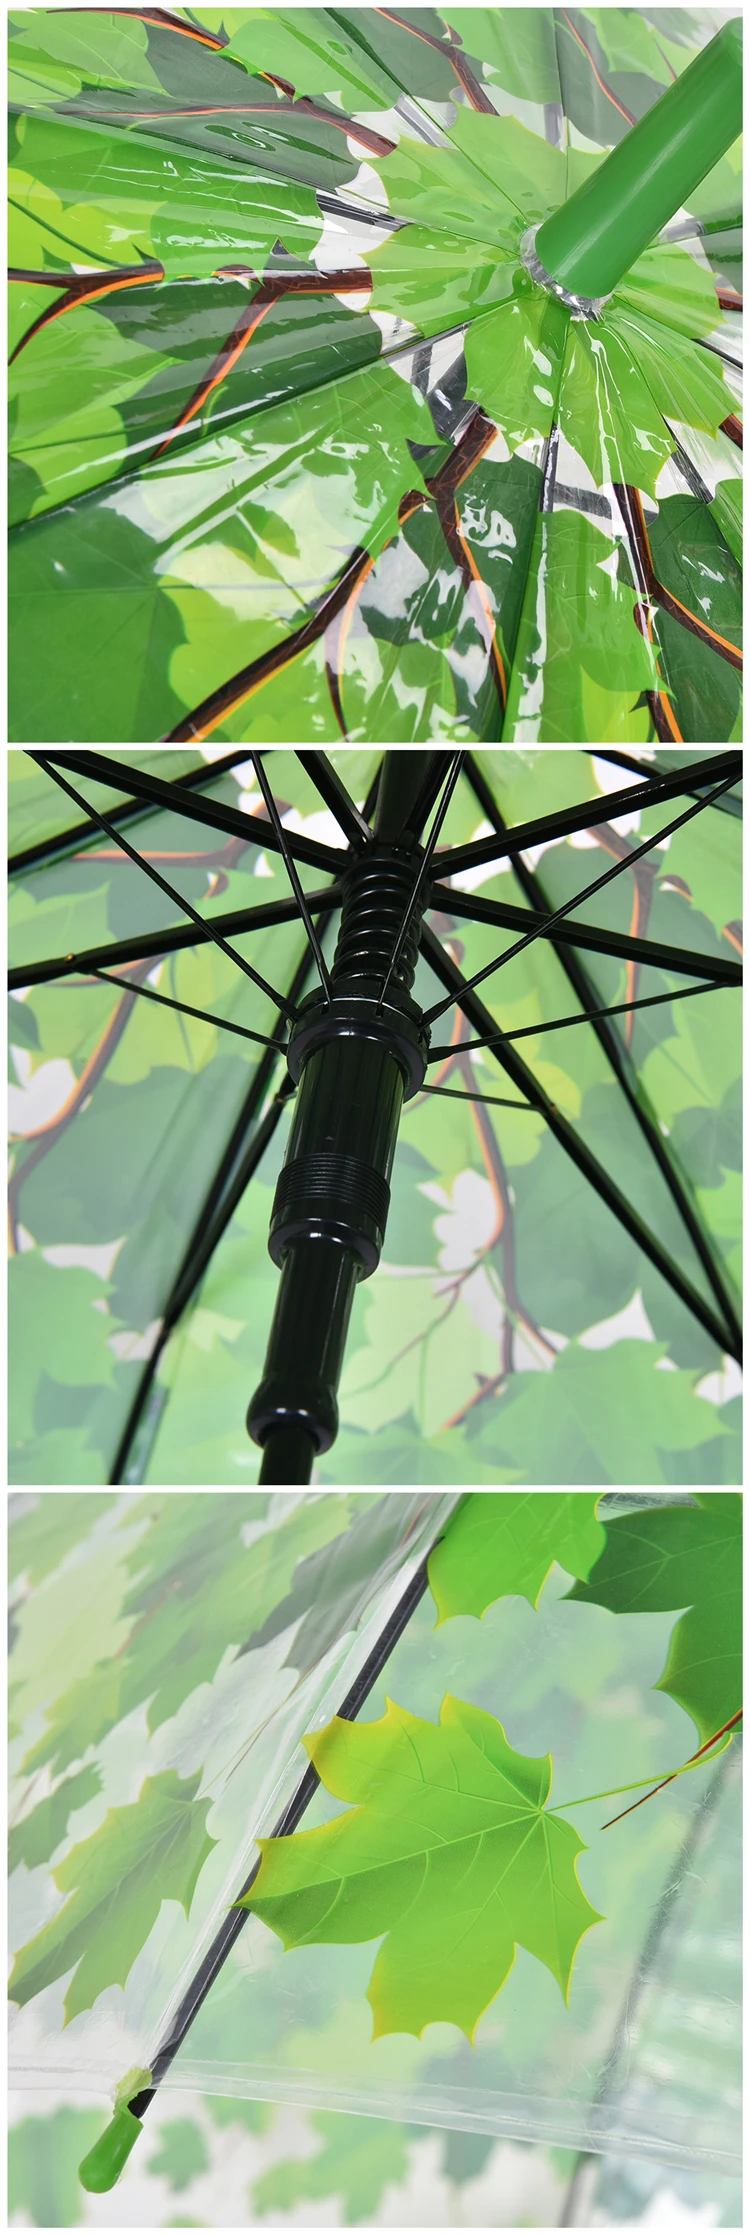 pvc umbrella detail1